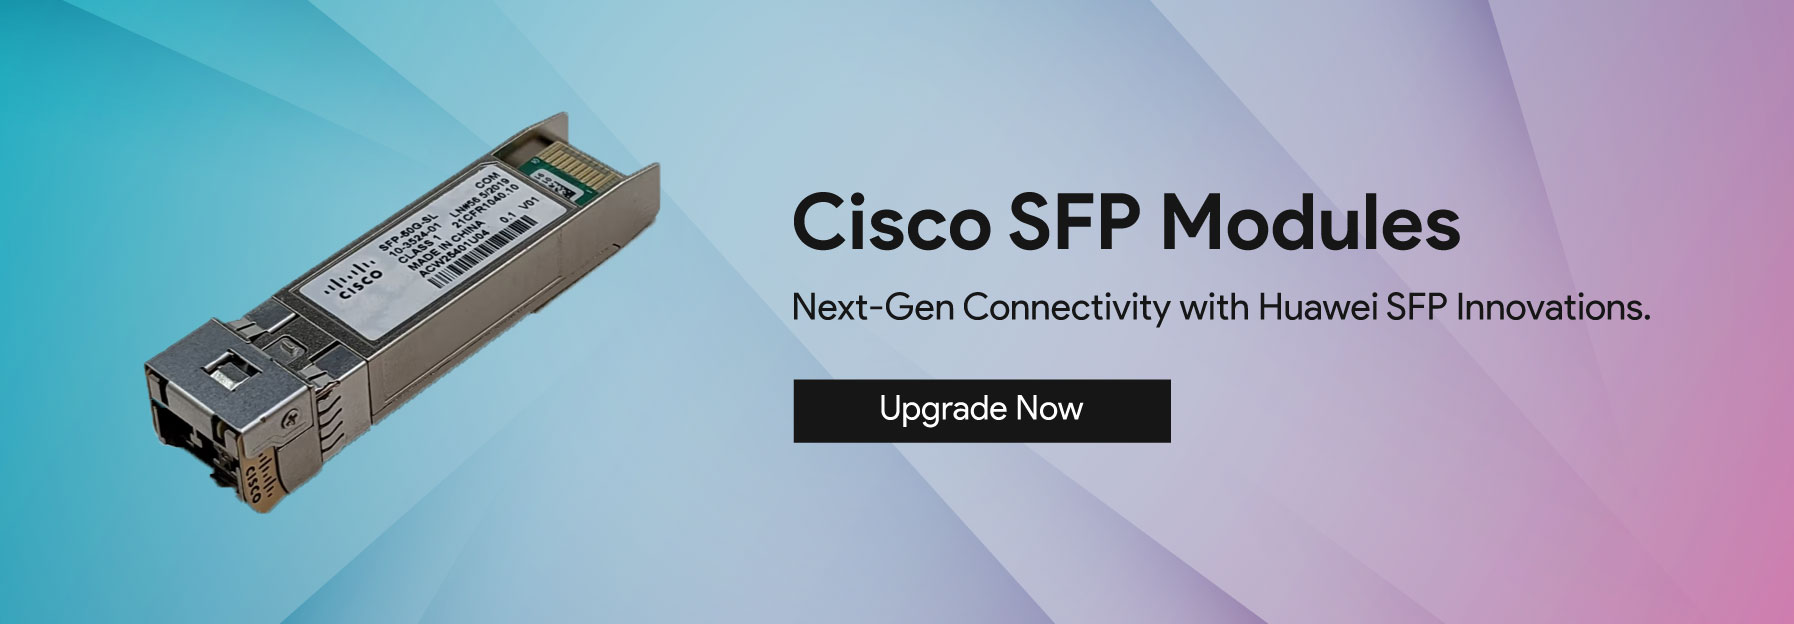 Cisco-SFP-Modules